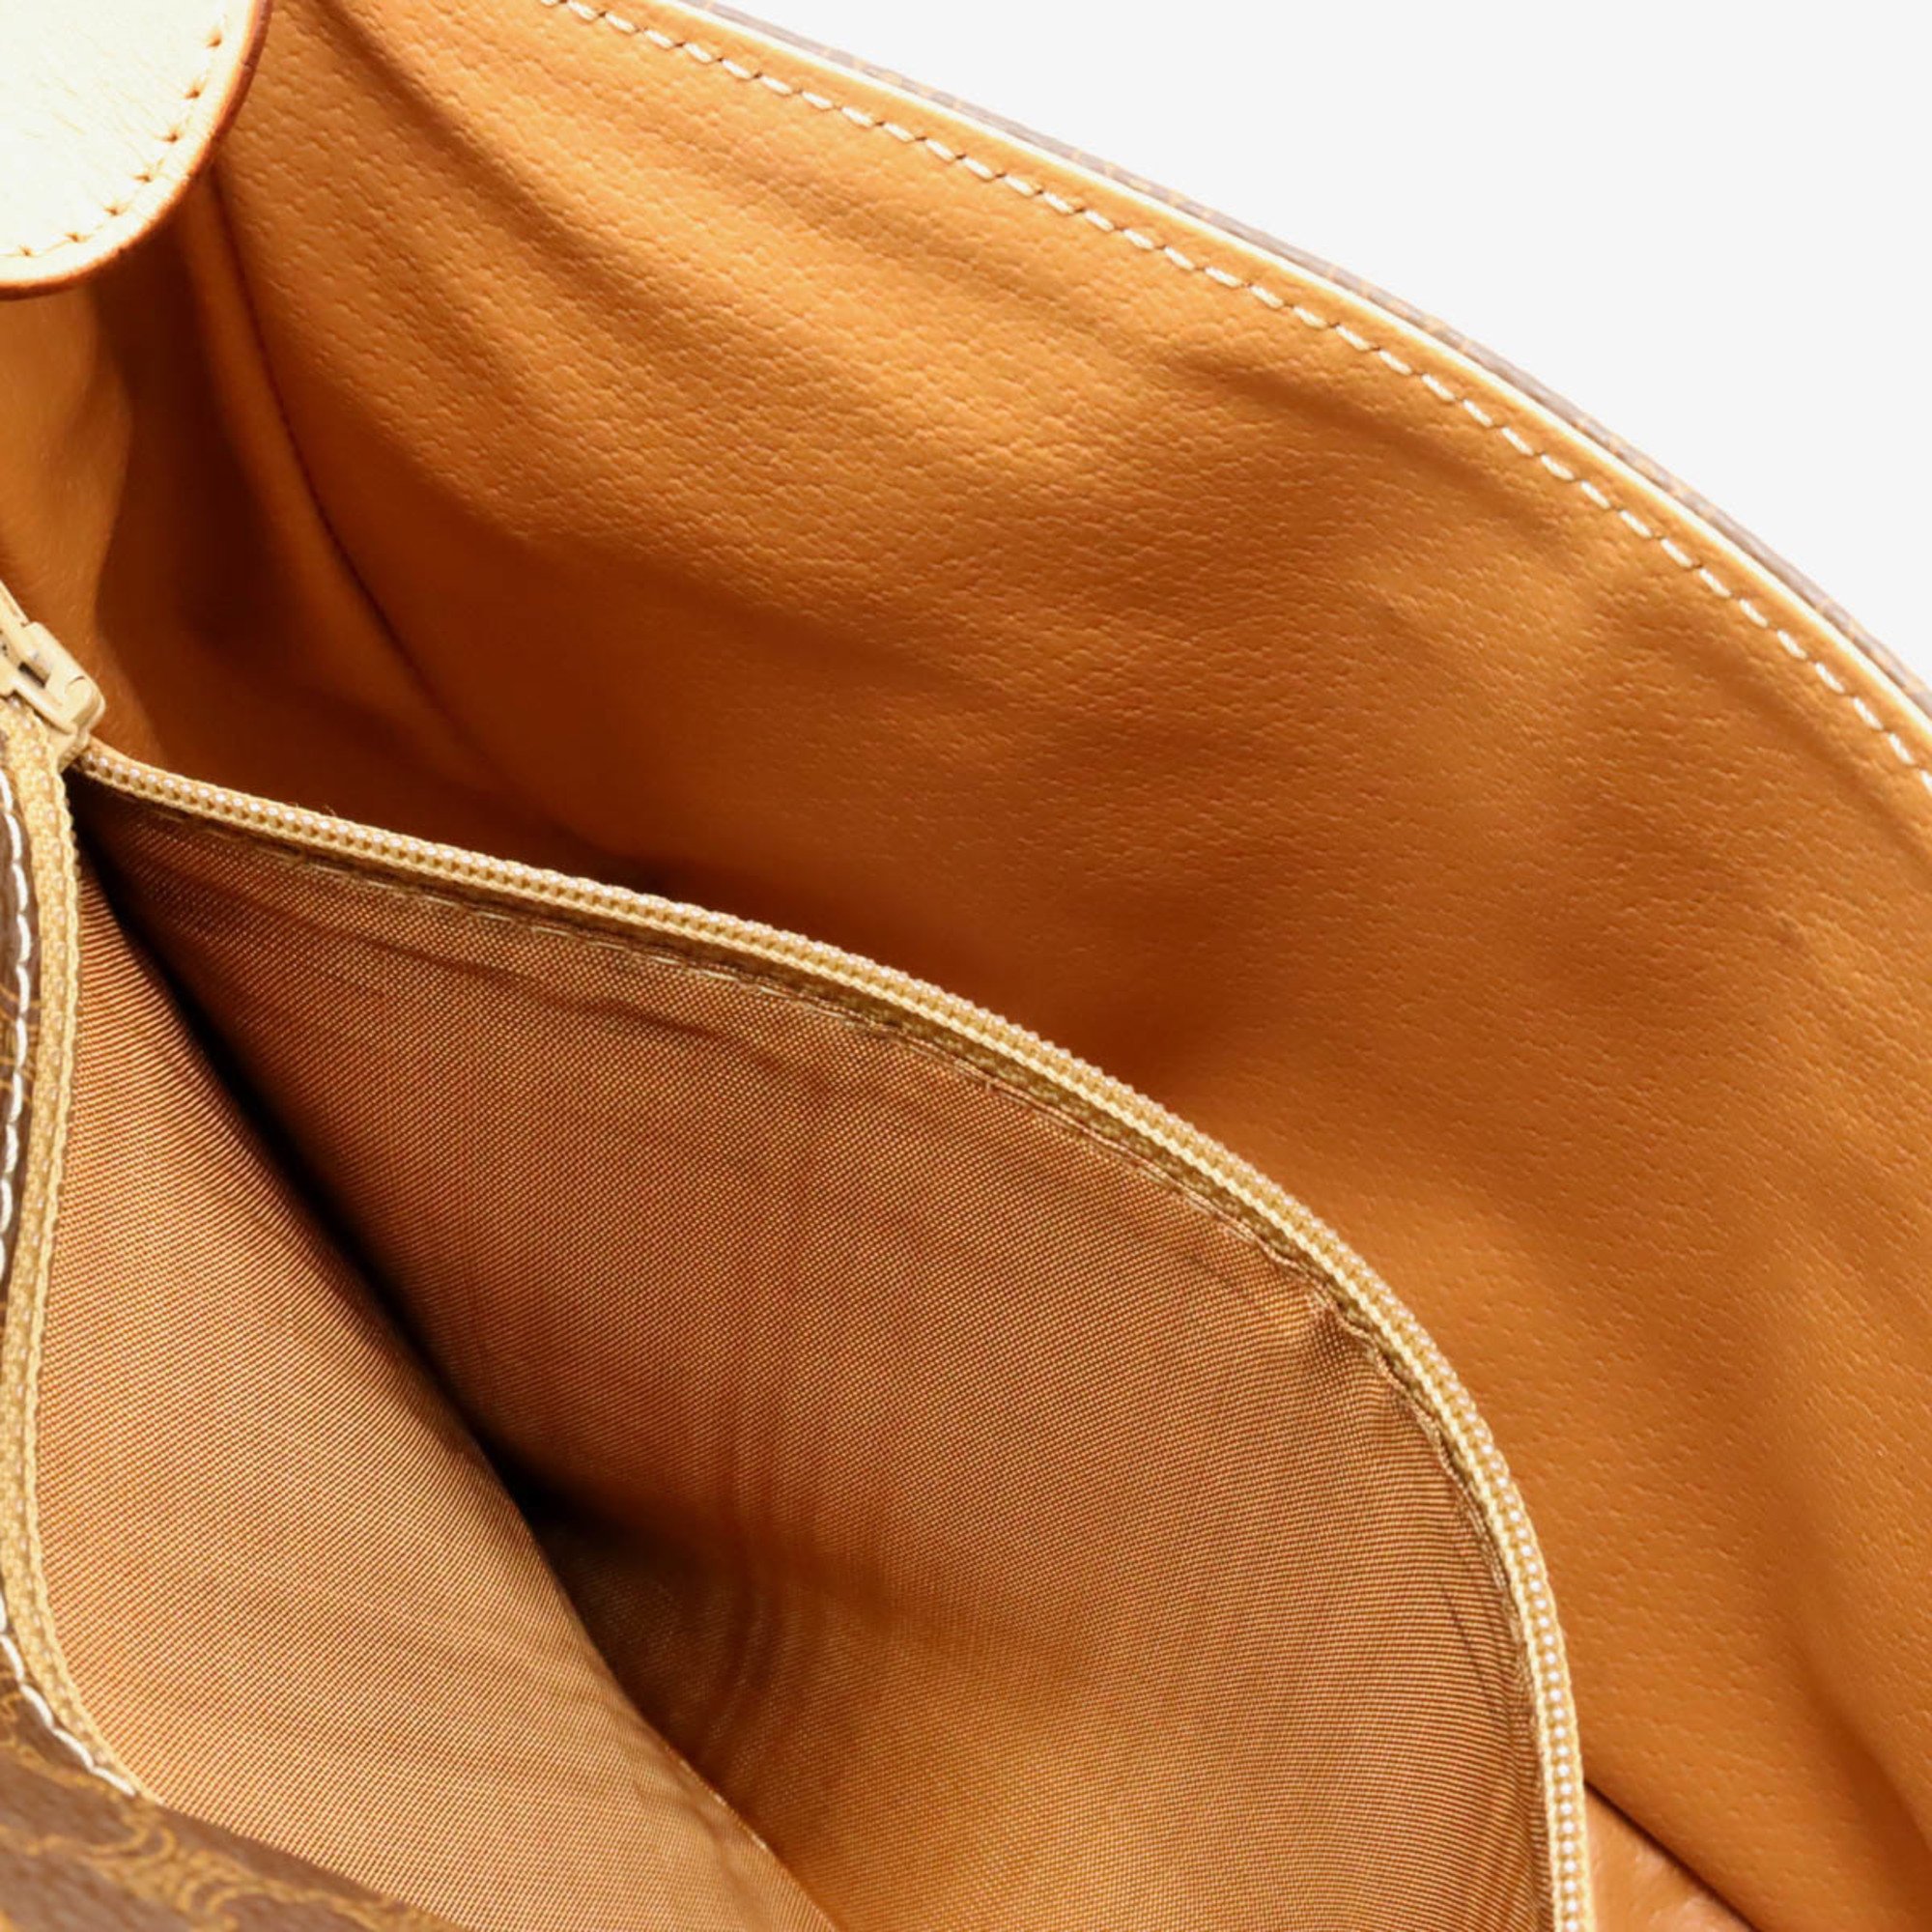 CELINE Macadam pattern blazon shoulder bag PVC leather dark brown light